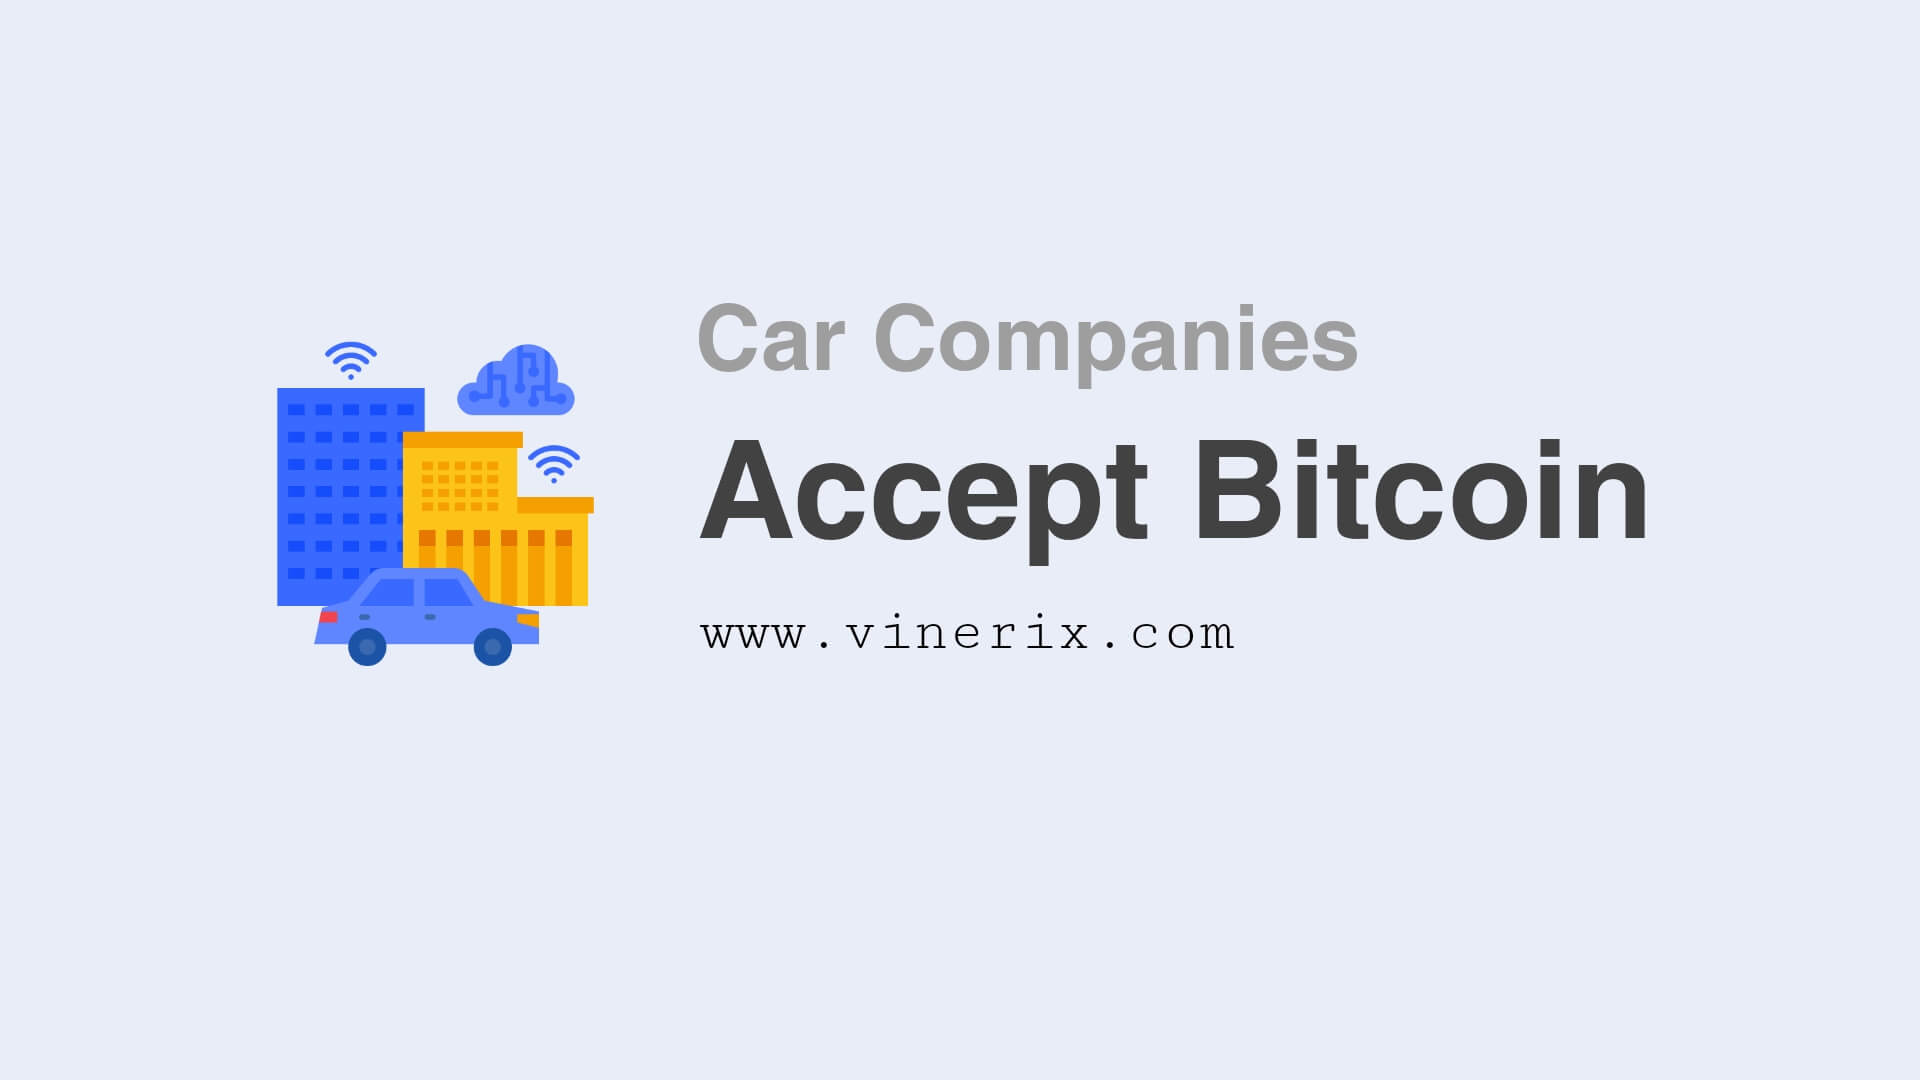 10 Car Companies That Accept Bitcoin